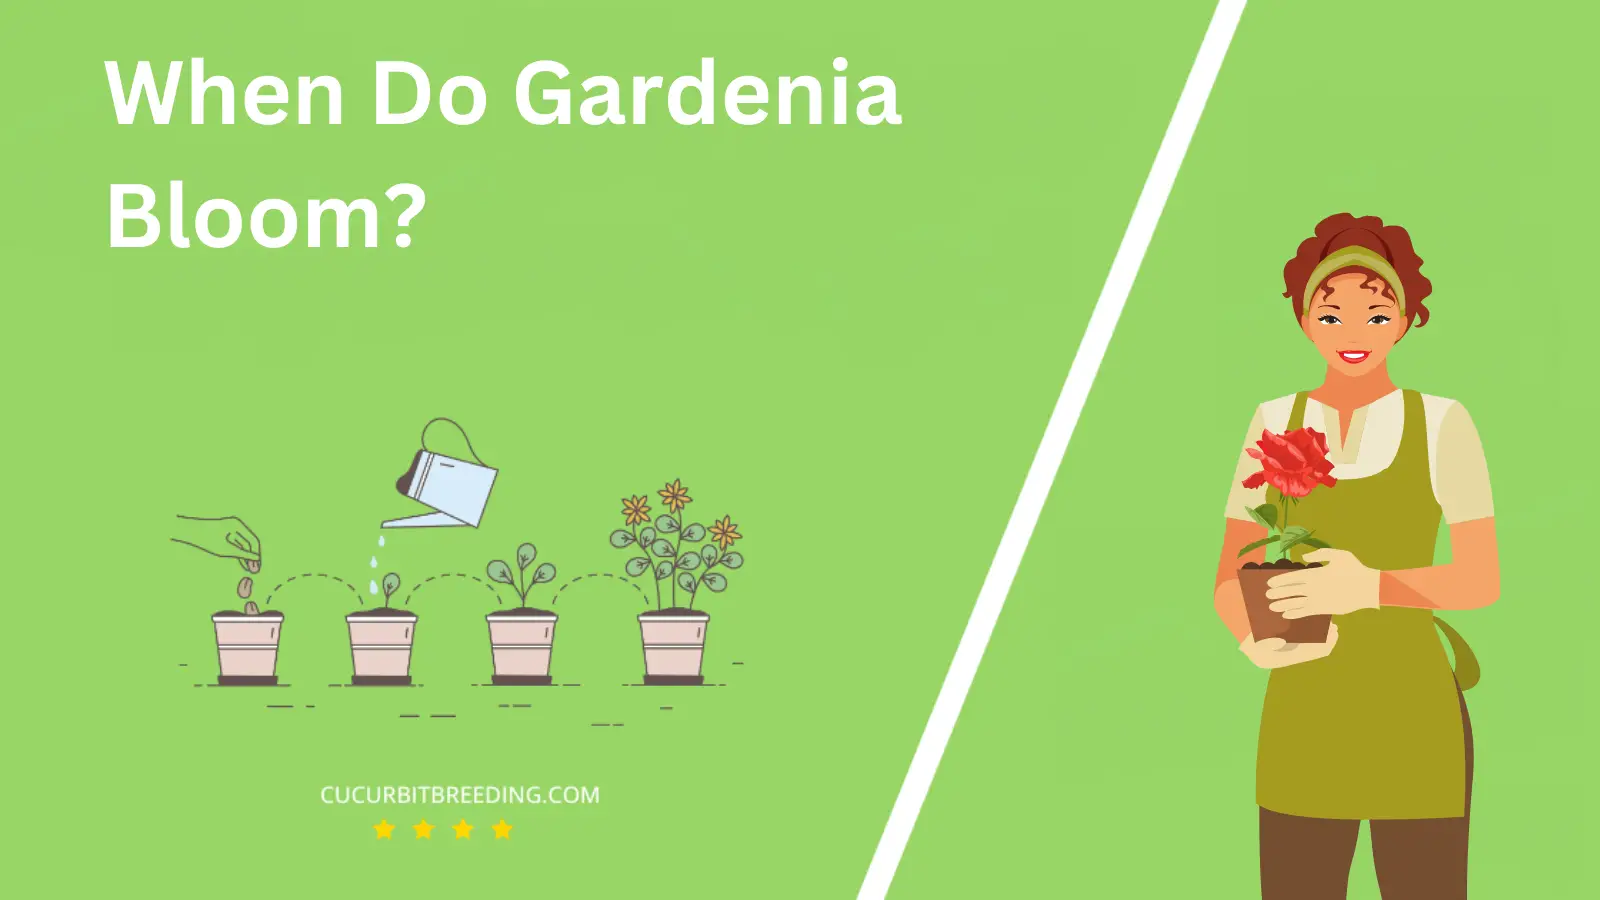 When Do Gardenia Bloom?